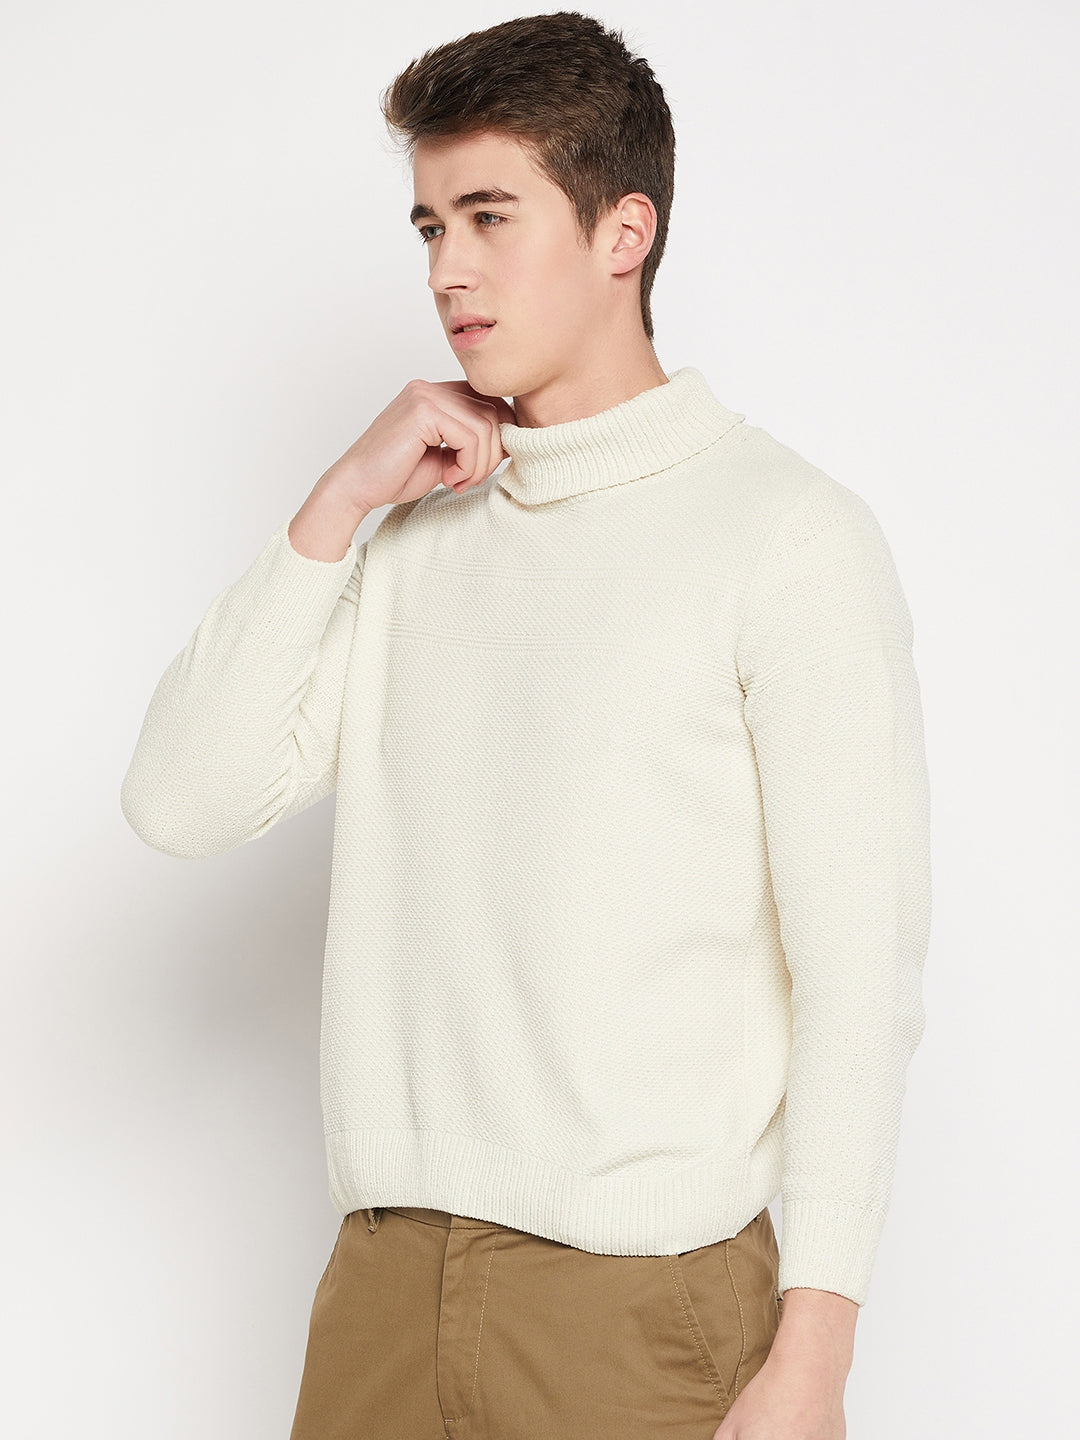 Camla Barcelona Off White Sweater For Men